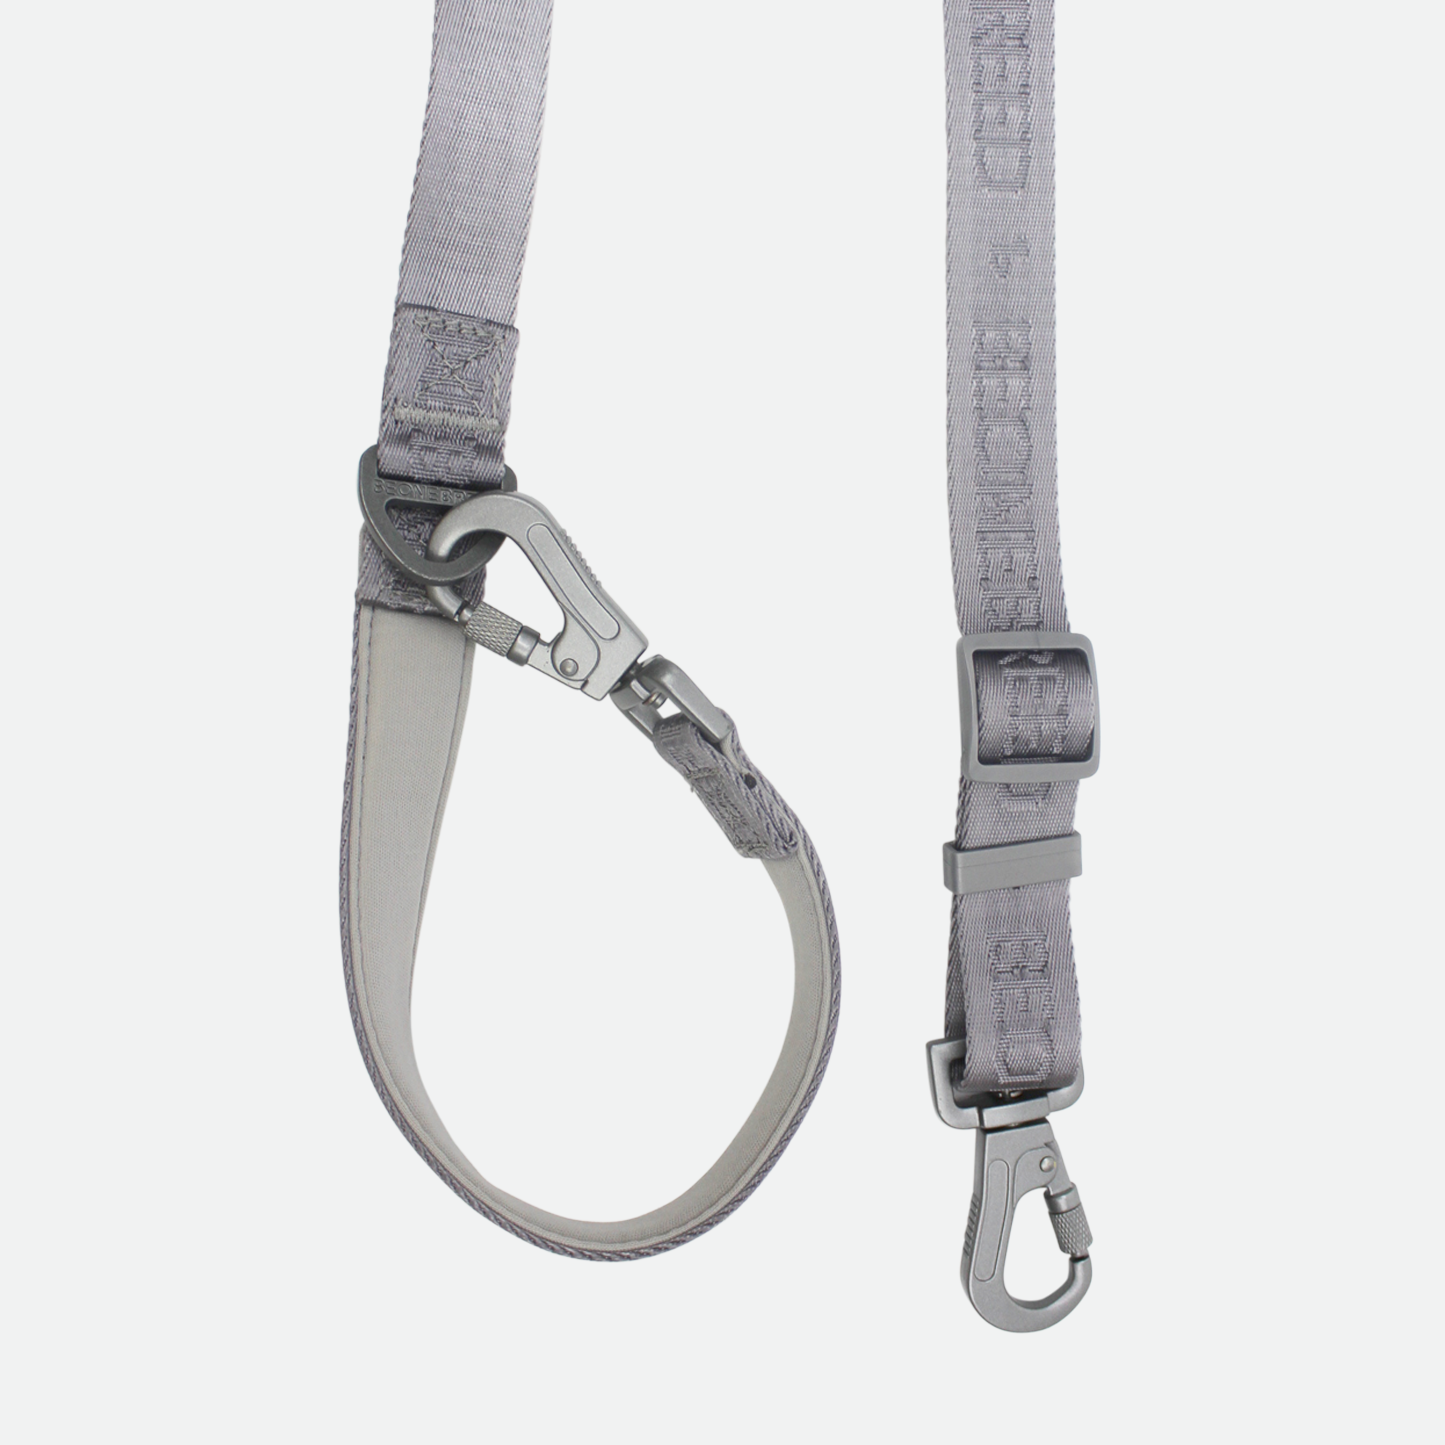 Adjustable nylon dog leash, gray